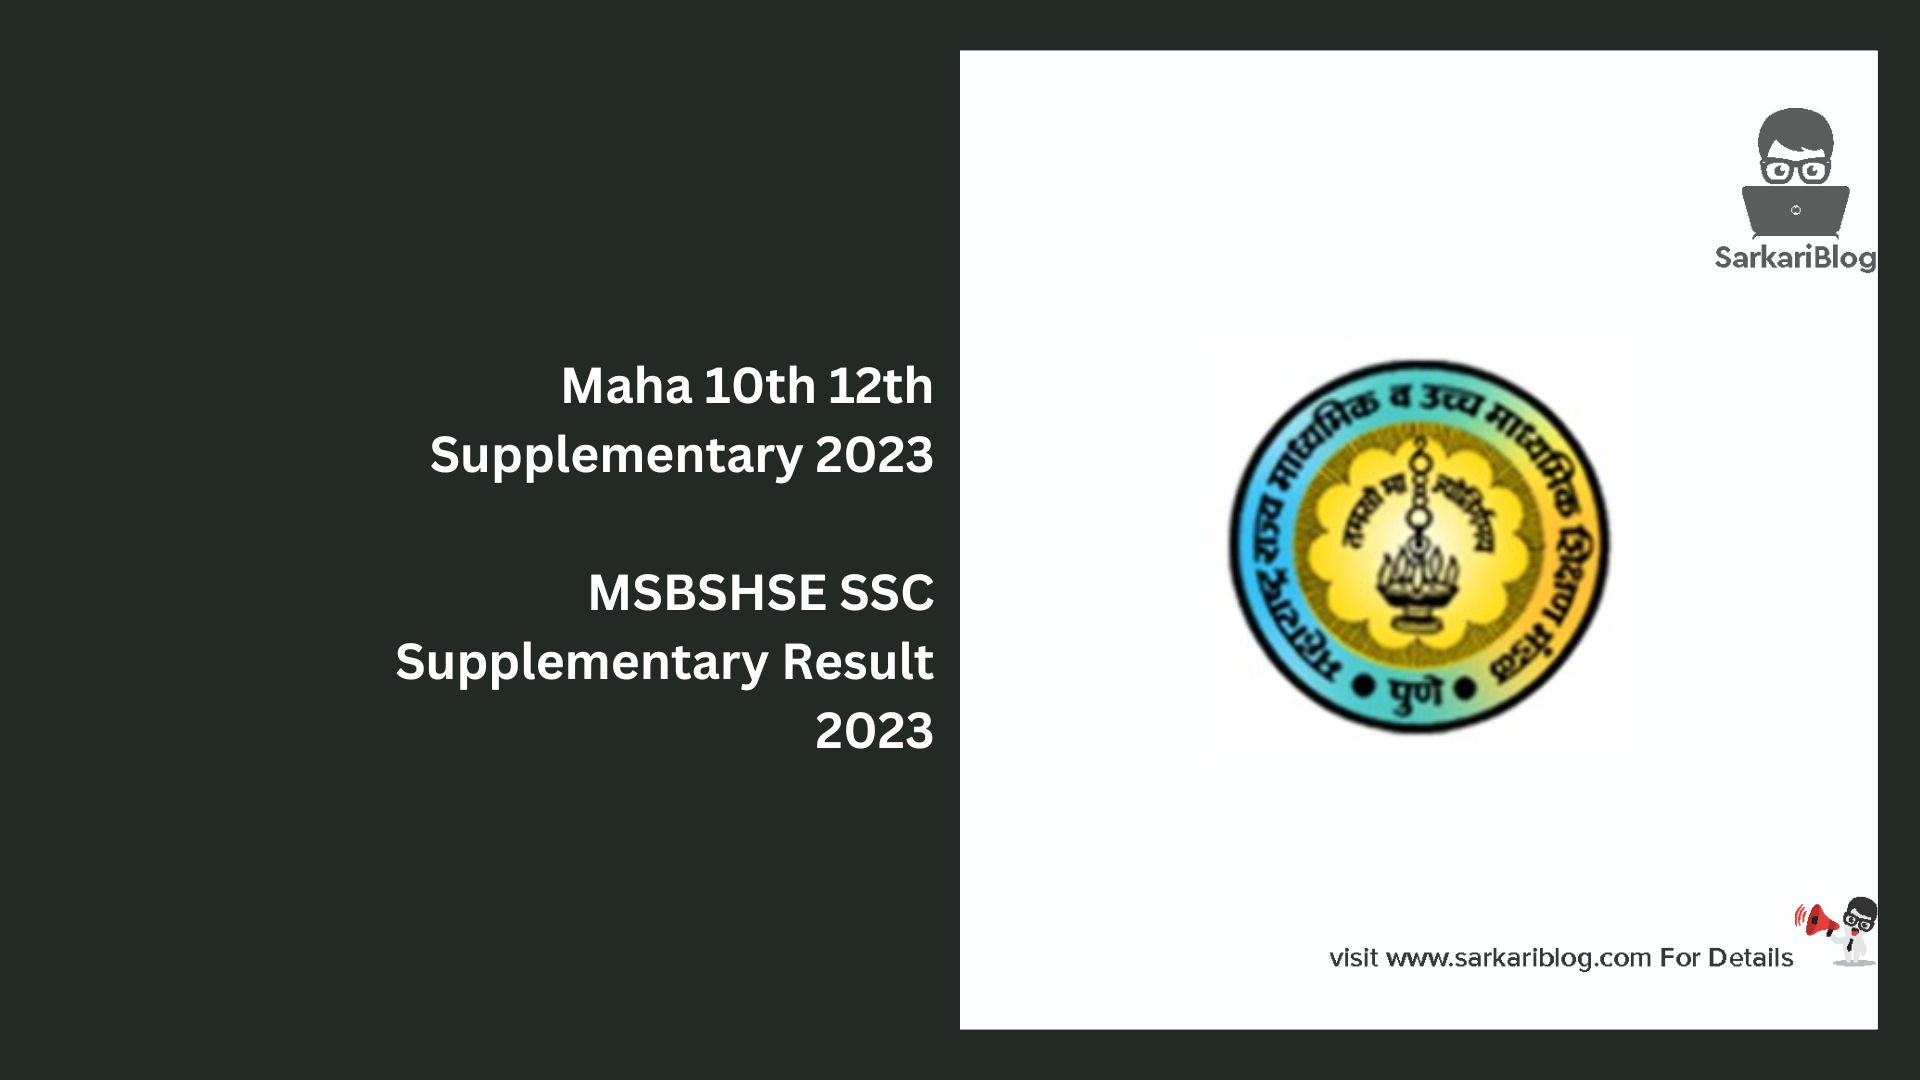 Maha 10th 12th Supplementary 2023